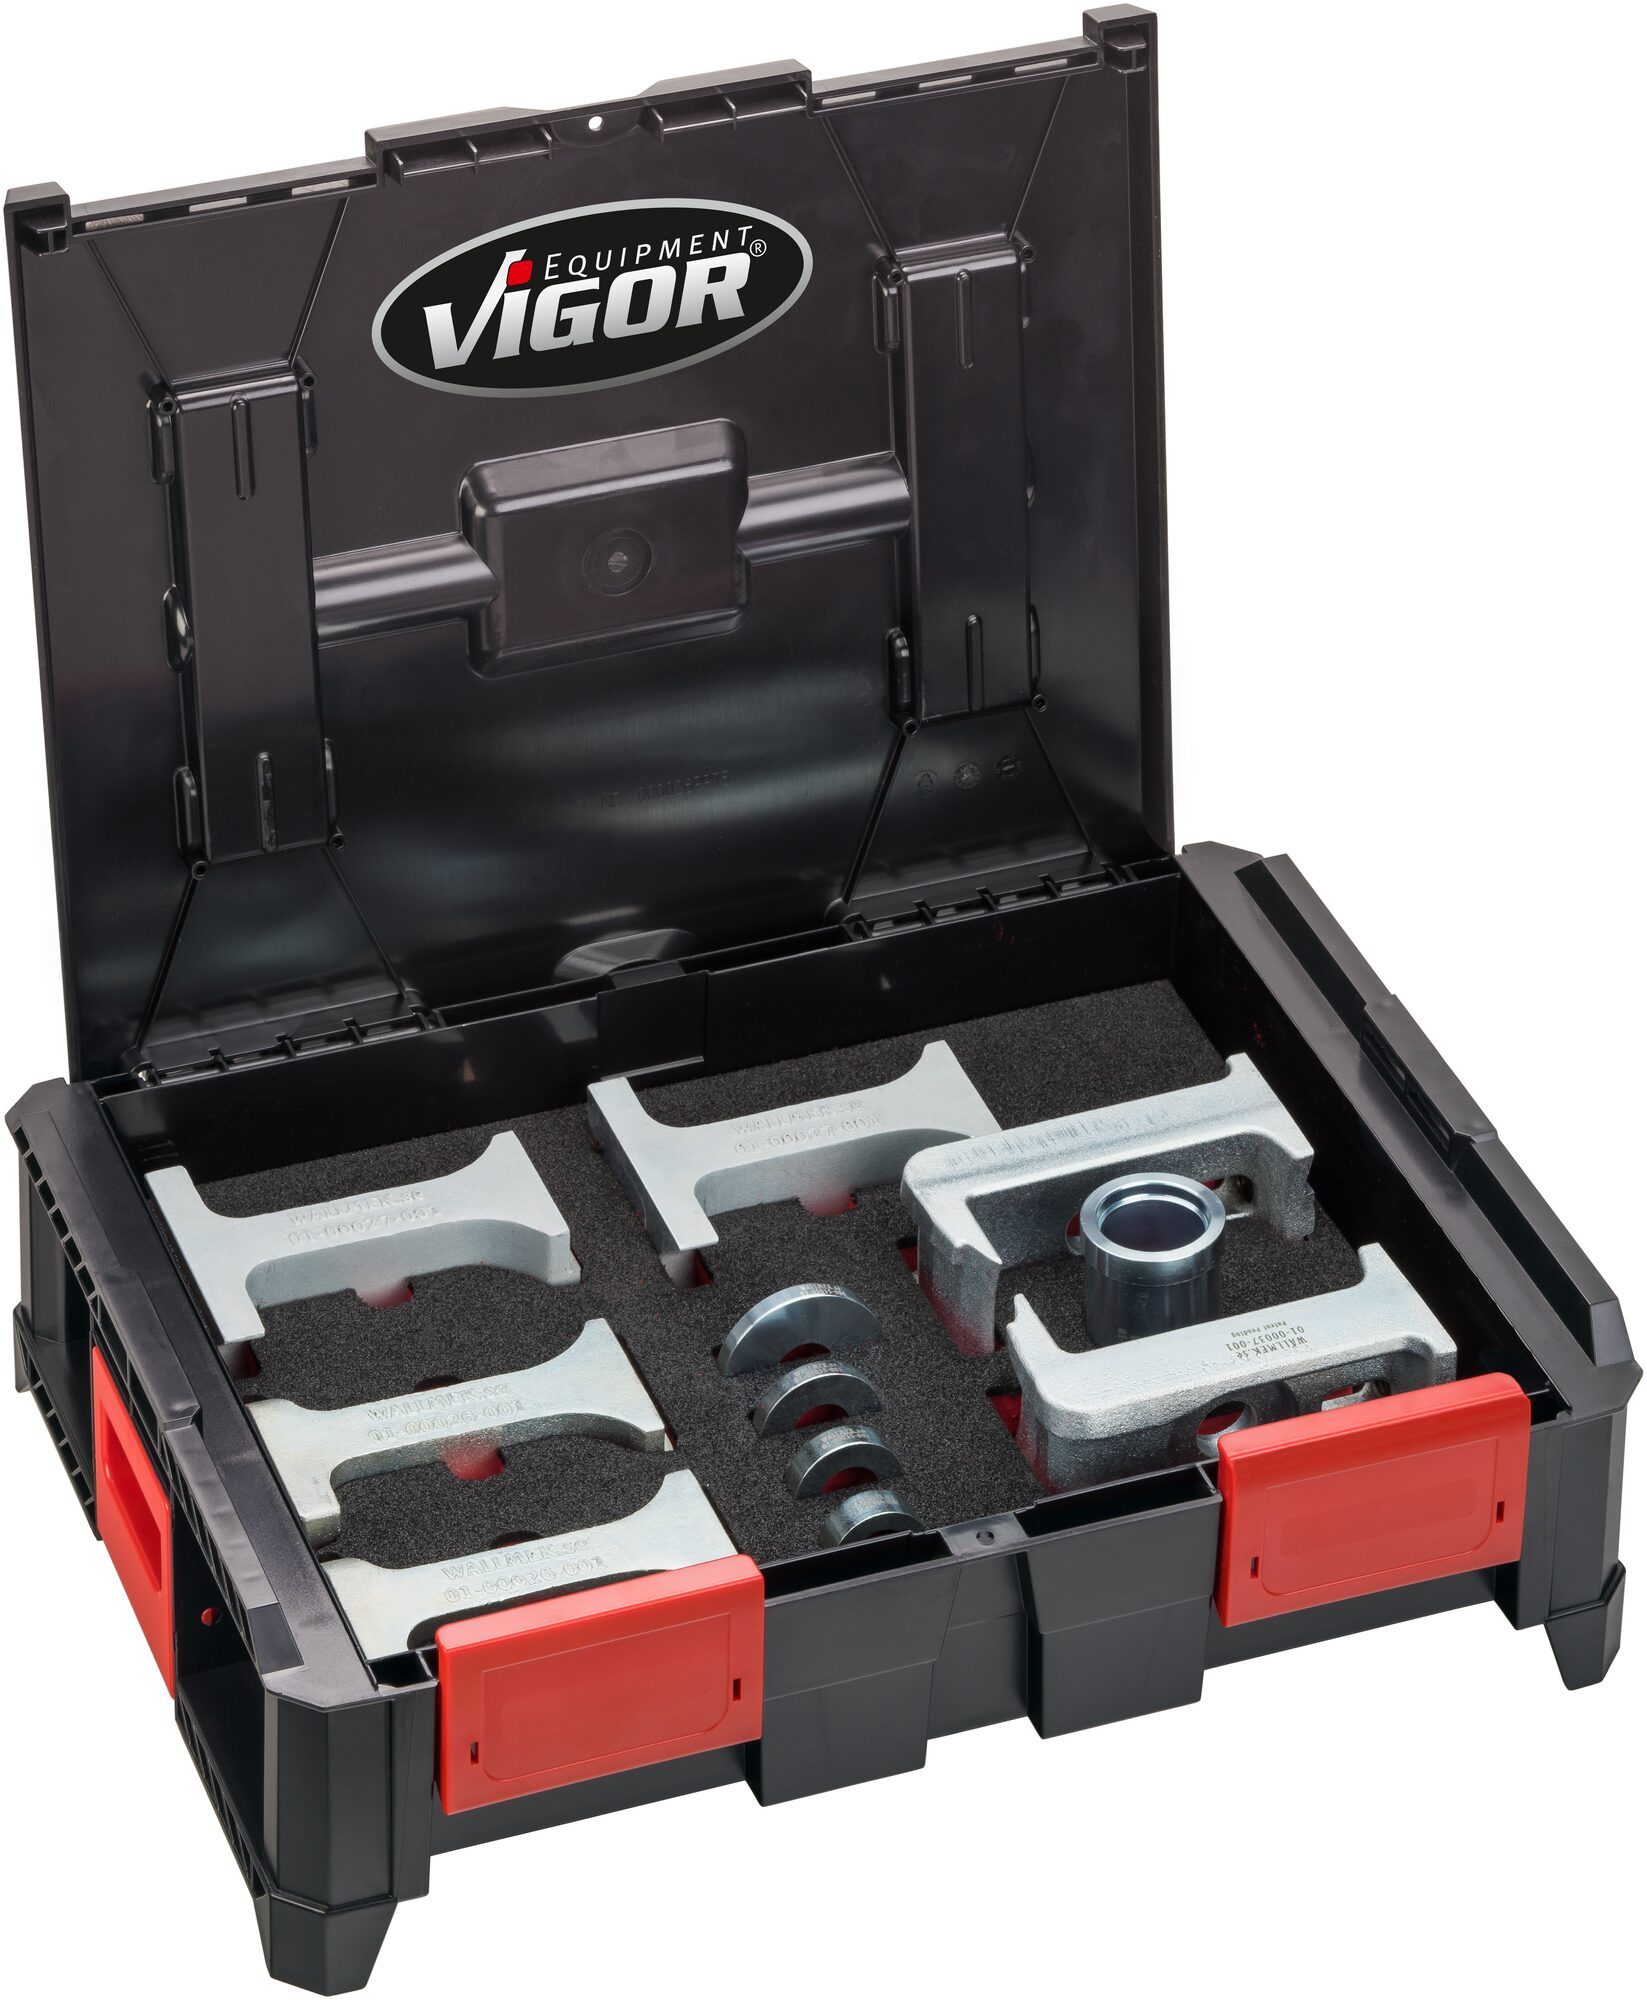 VIGOR Multibox V4700-L ∙ Kompakt-Radlager / -Nabe Erweiterungssatz ∙ V5549 ∙ Anzahl Werkzeuge: 11